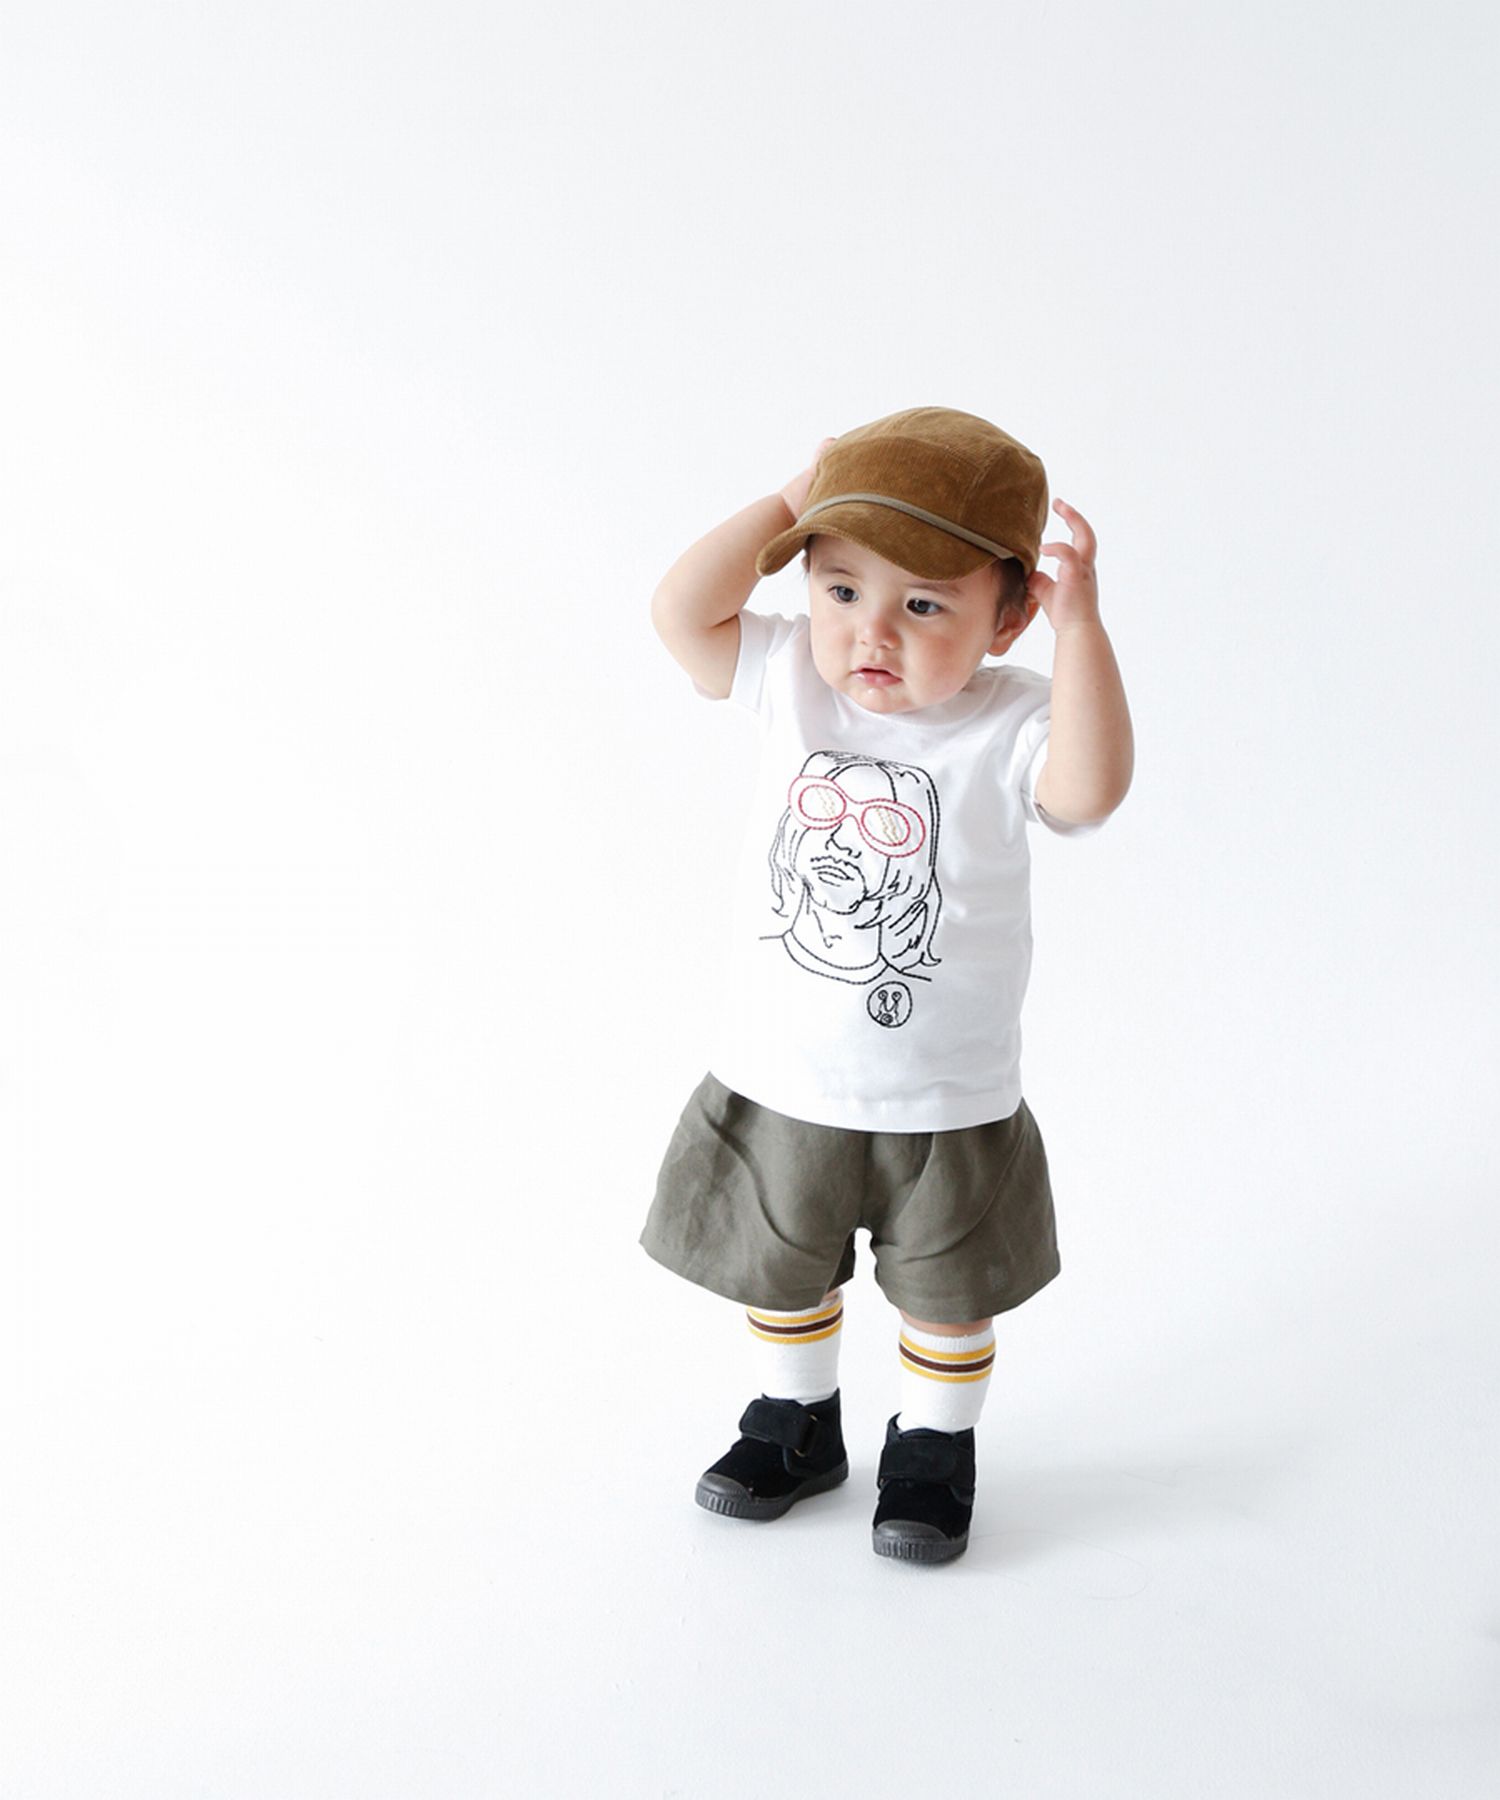 Soulsmania KidsCHILL OUT SOX PILE 捧呈 HIGH 人気のファッションブランド！